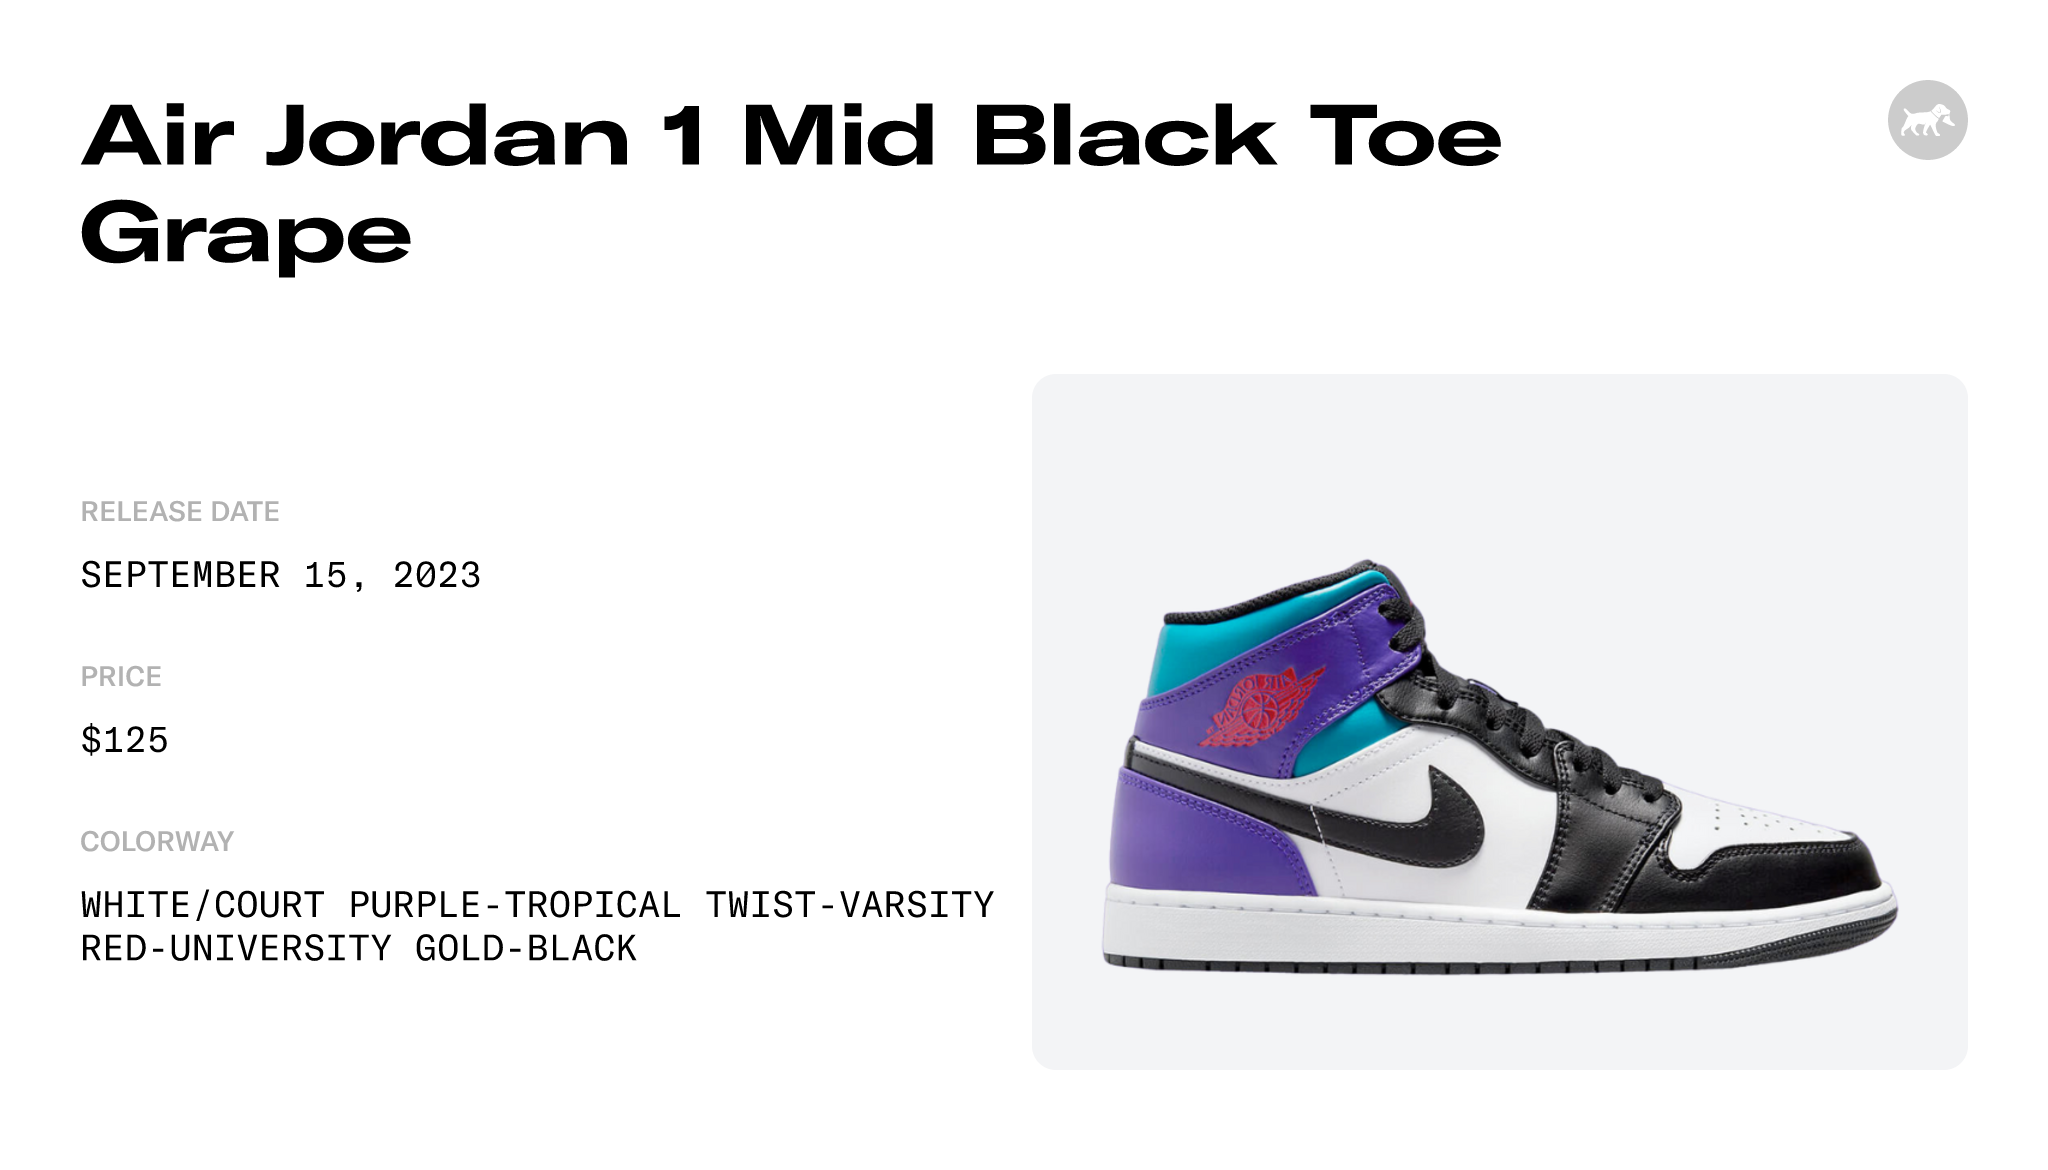 Air Jordan 1 Mid Black Toe Grape - DQ8426-154 Raffles and Release Date